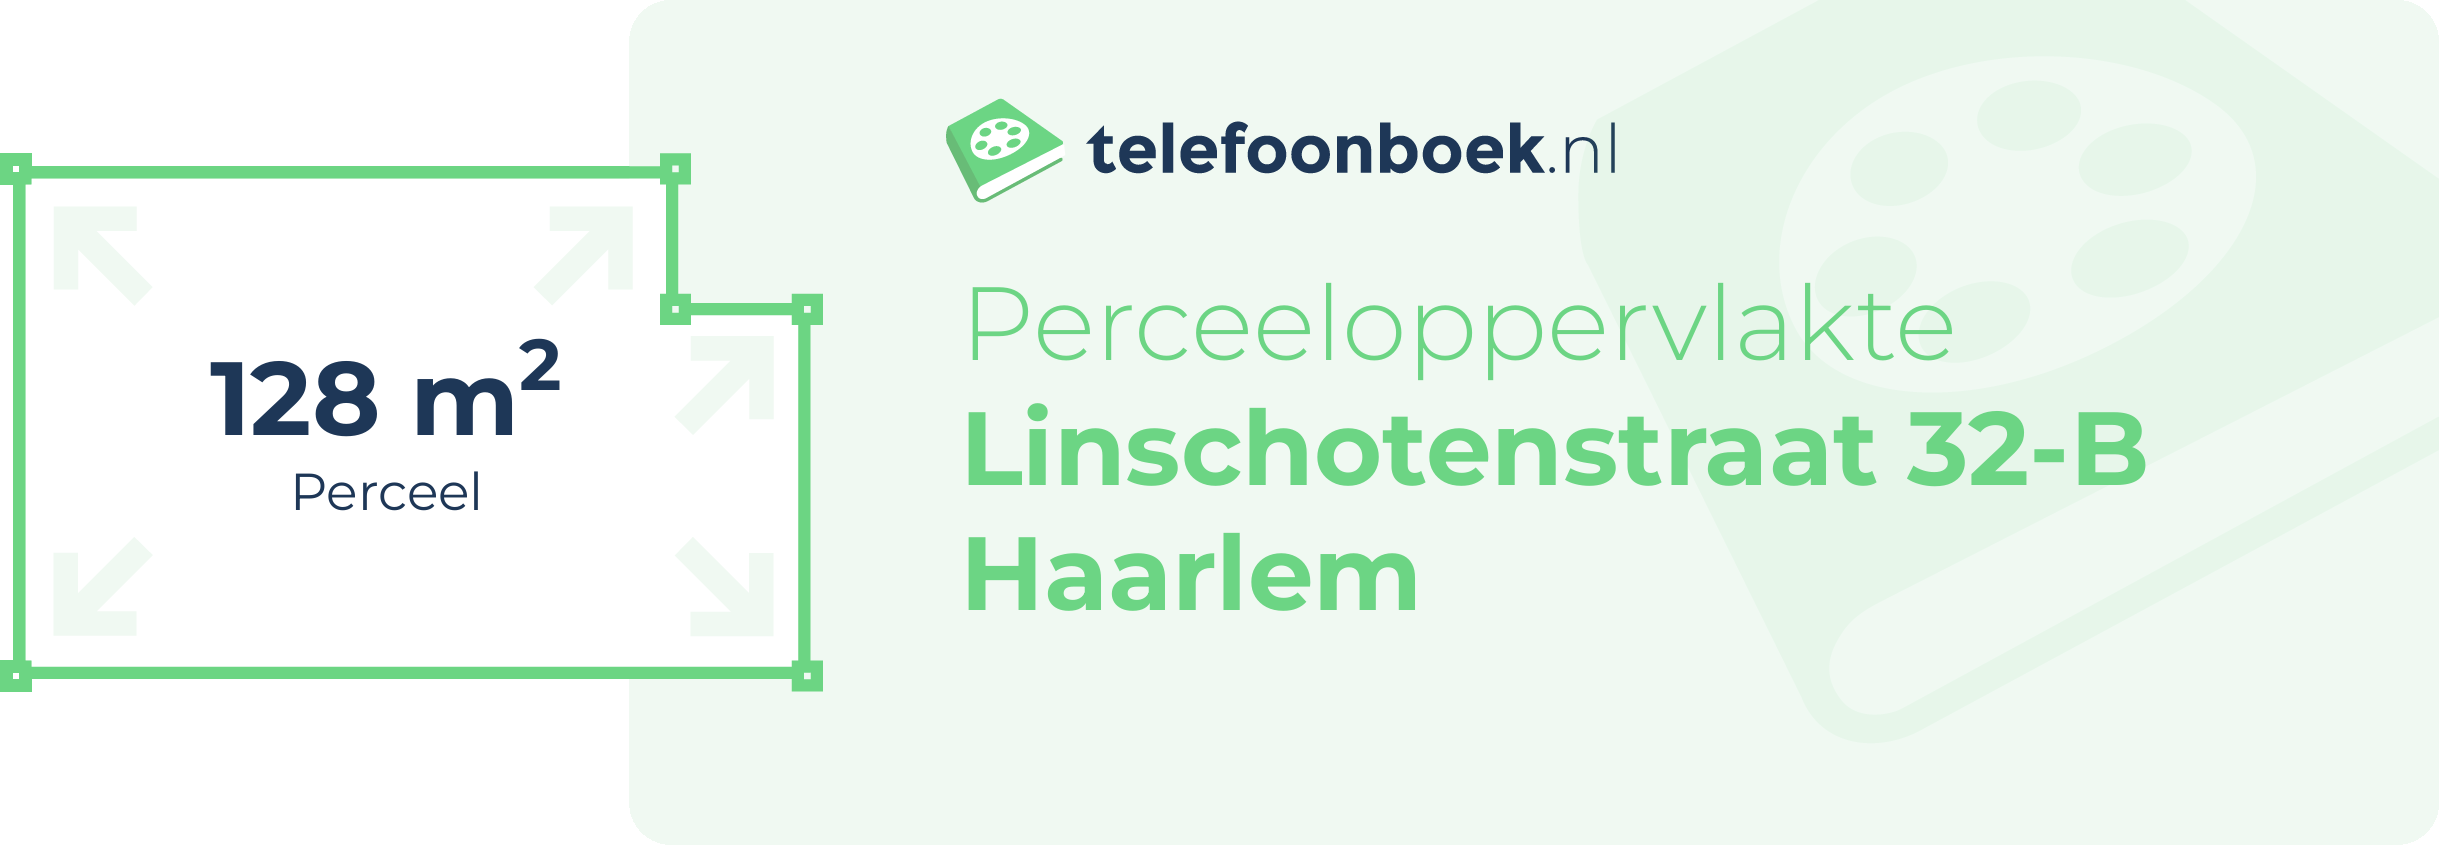 Perceeloppervlakte Linschotenstraat 32-B Haarlem